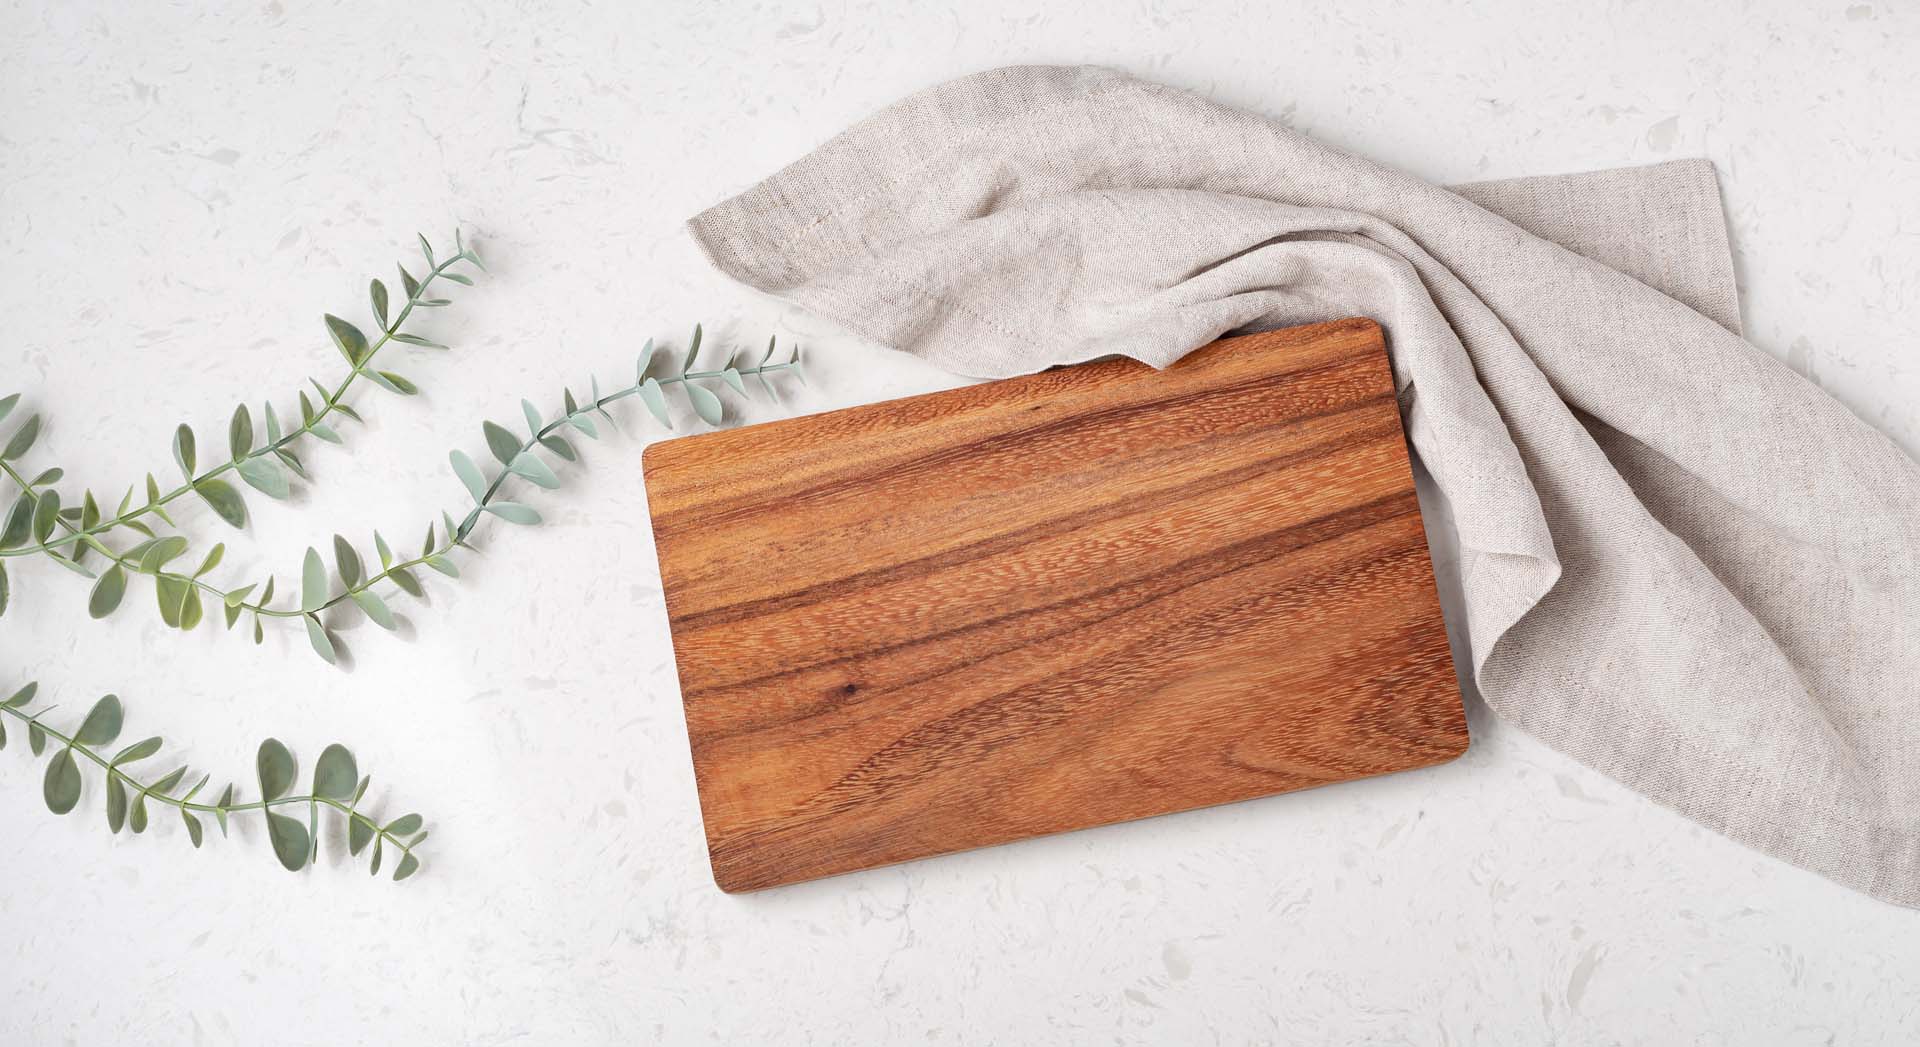 A wooden chopping board